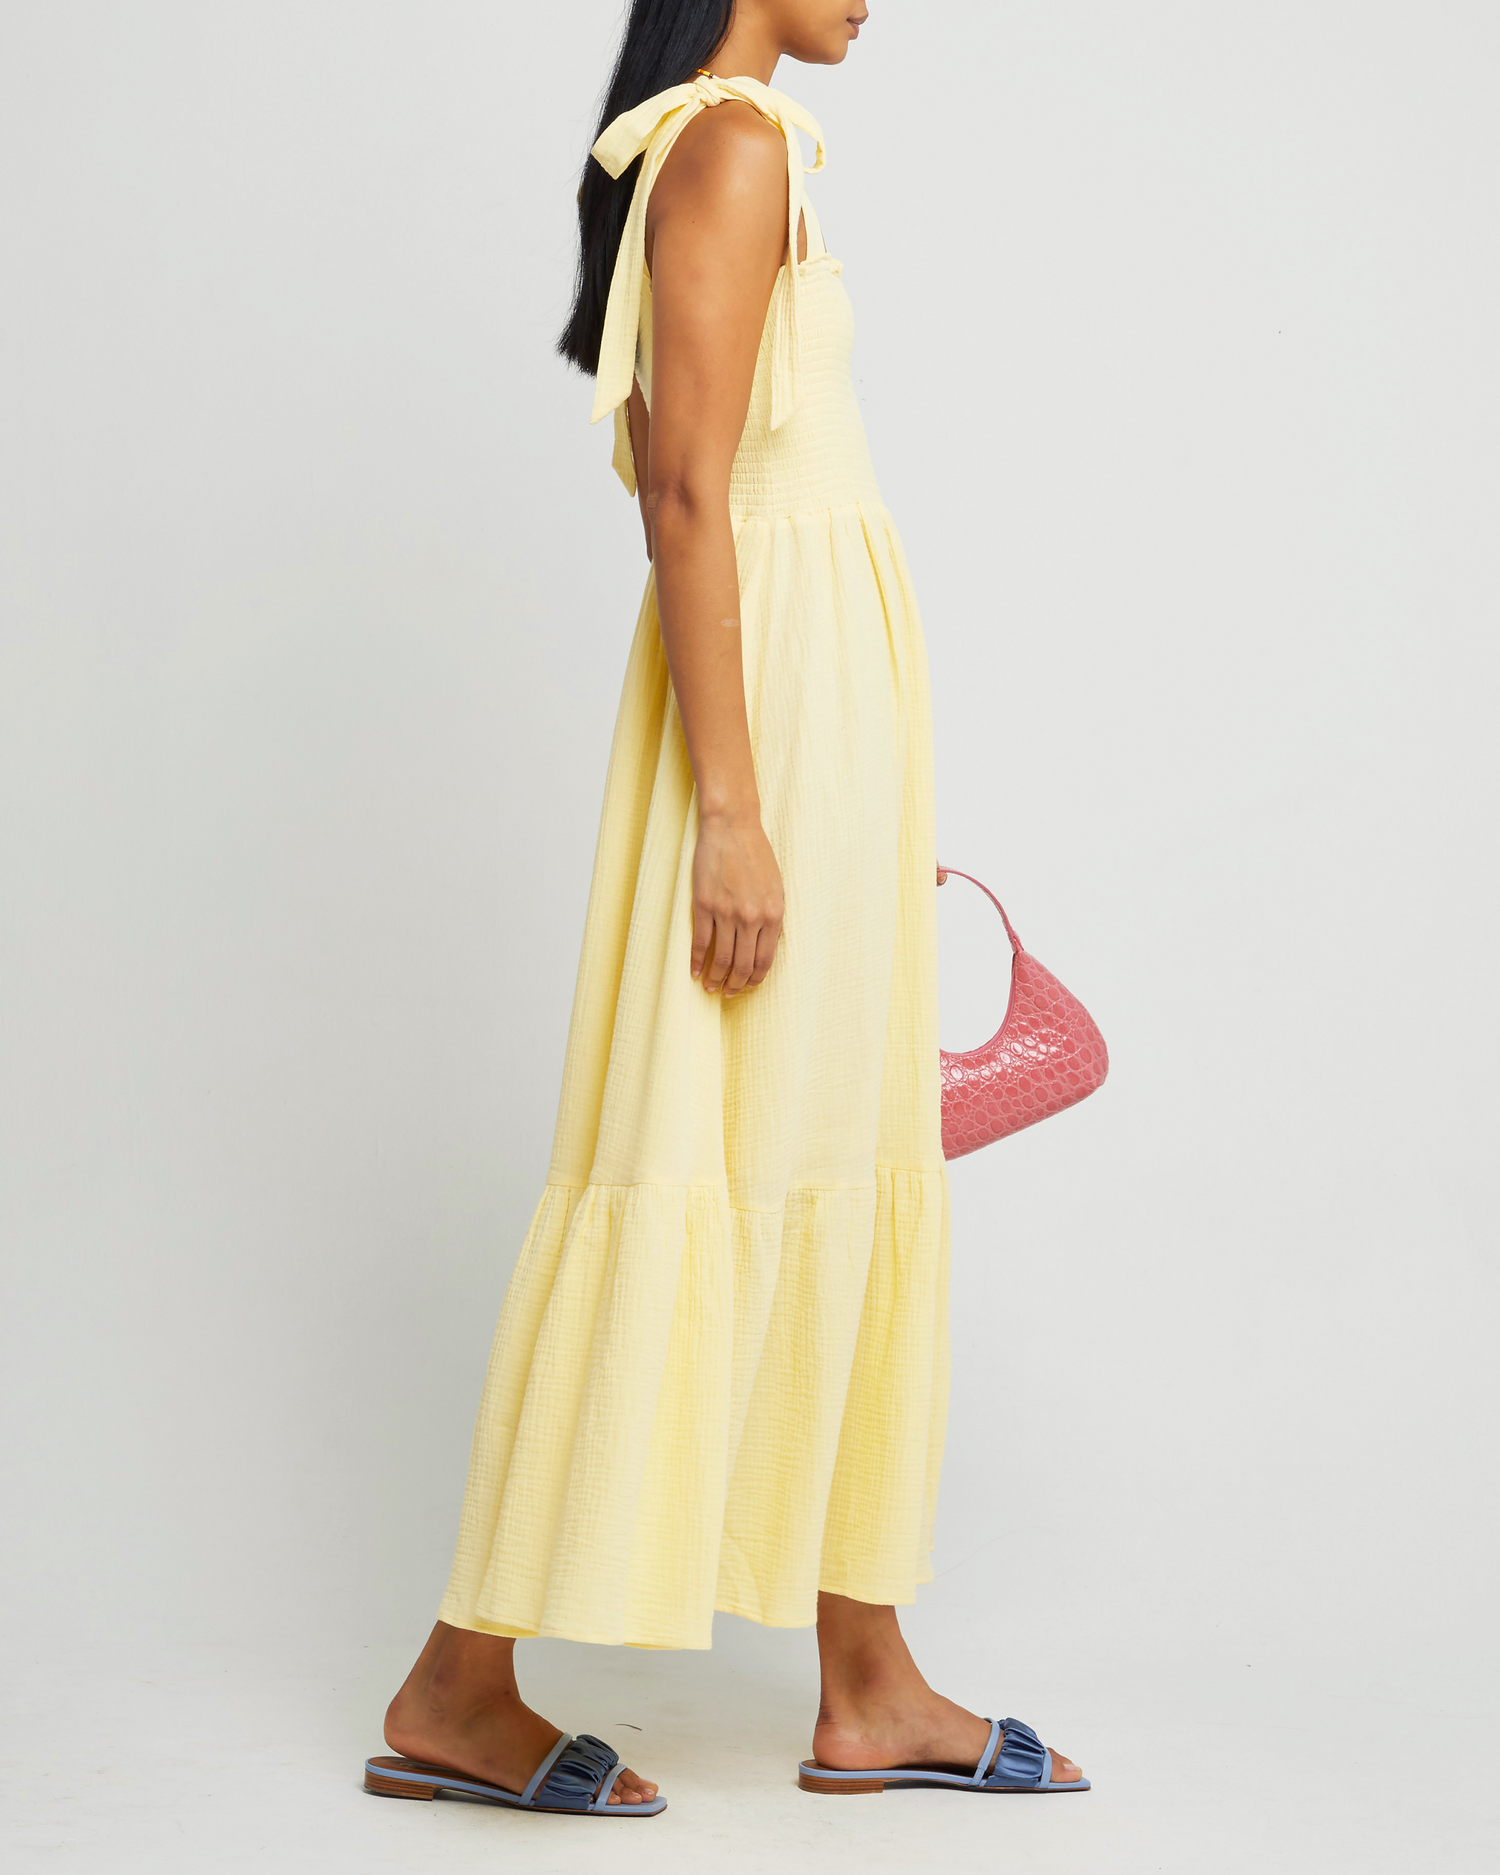 Third image of Cotton Winnie Dress, a yellow maxi dress, tie straps, smocked bodice